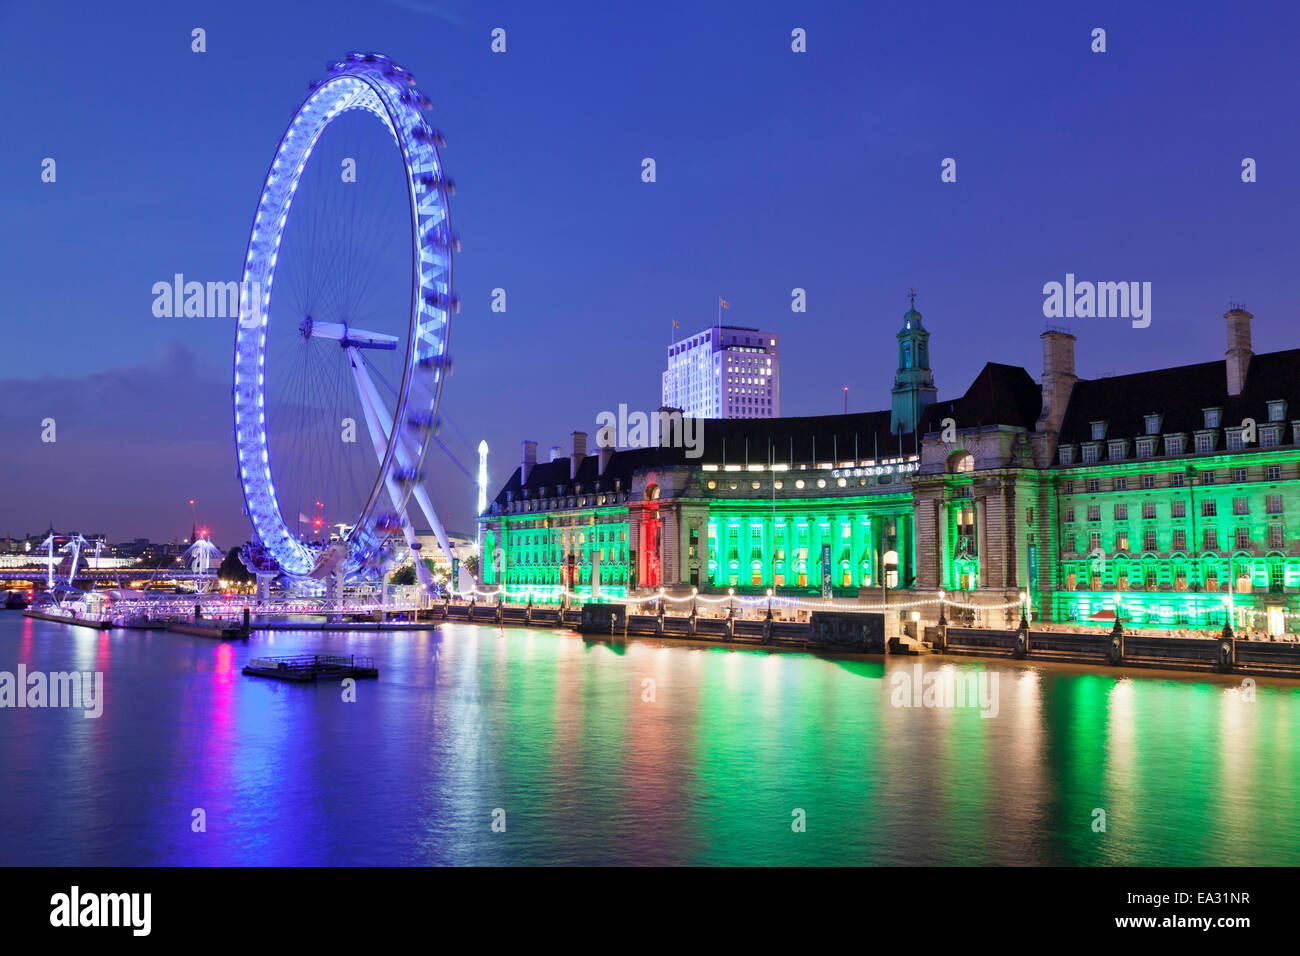 Millennium Wheel (London Eye), Old County Hall, London Aquarium, River Thames, South Bank, London, England, United Kingdom Stock Photo